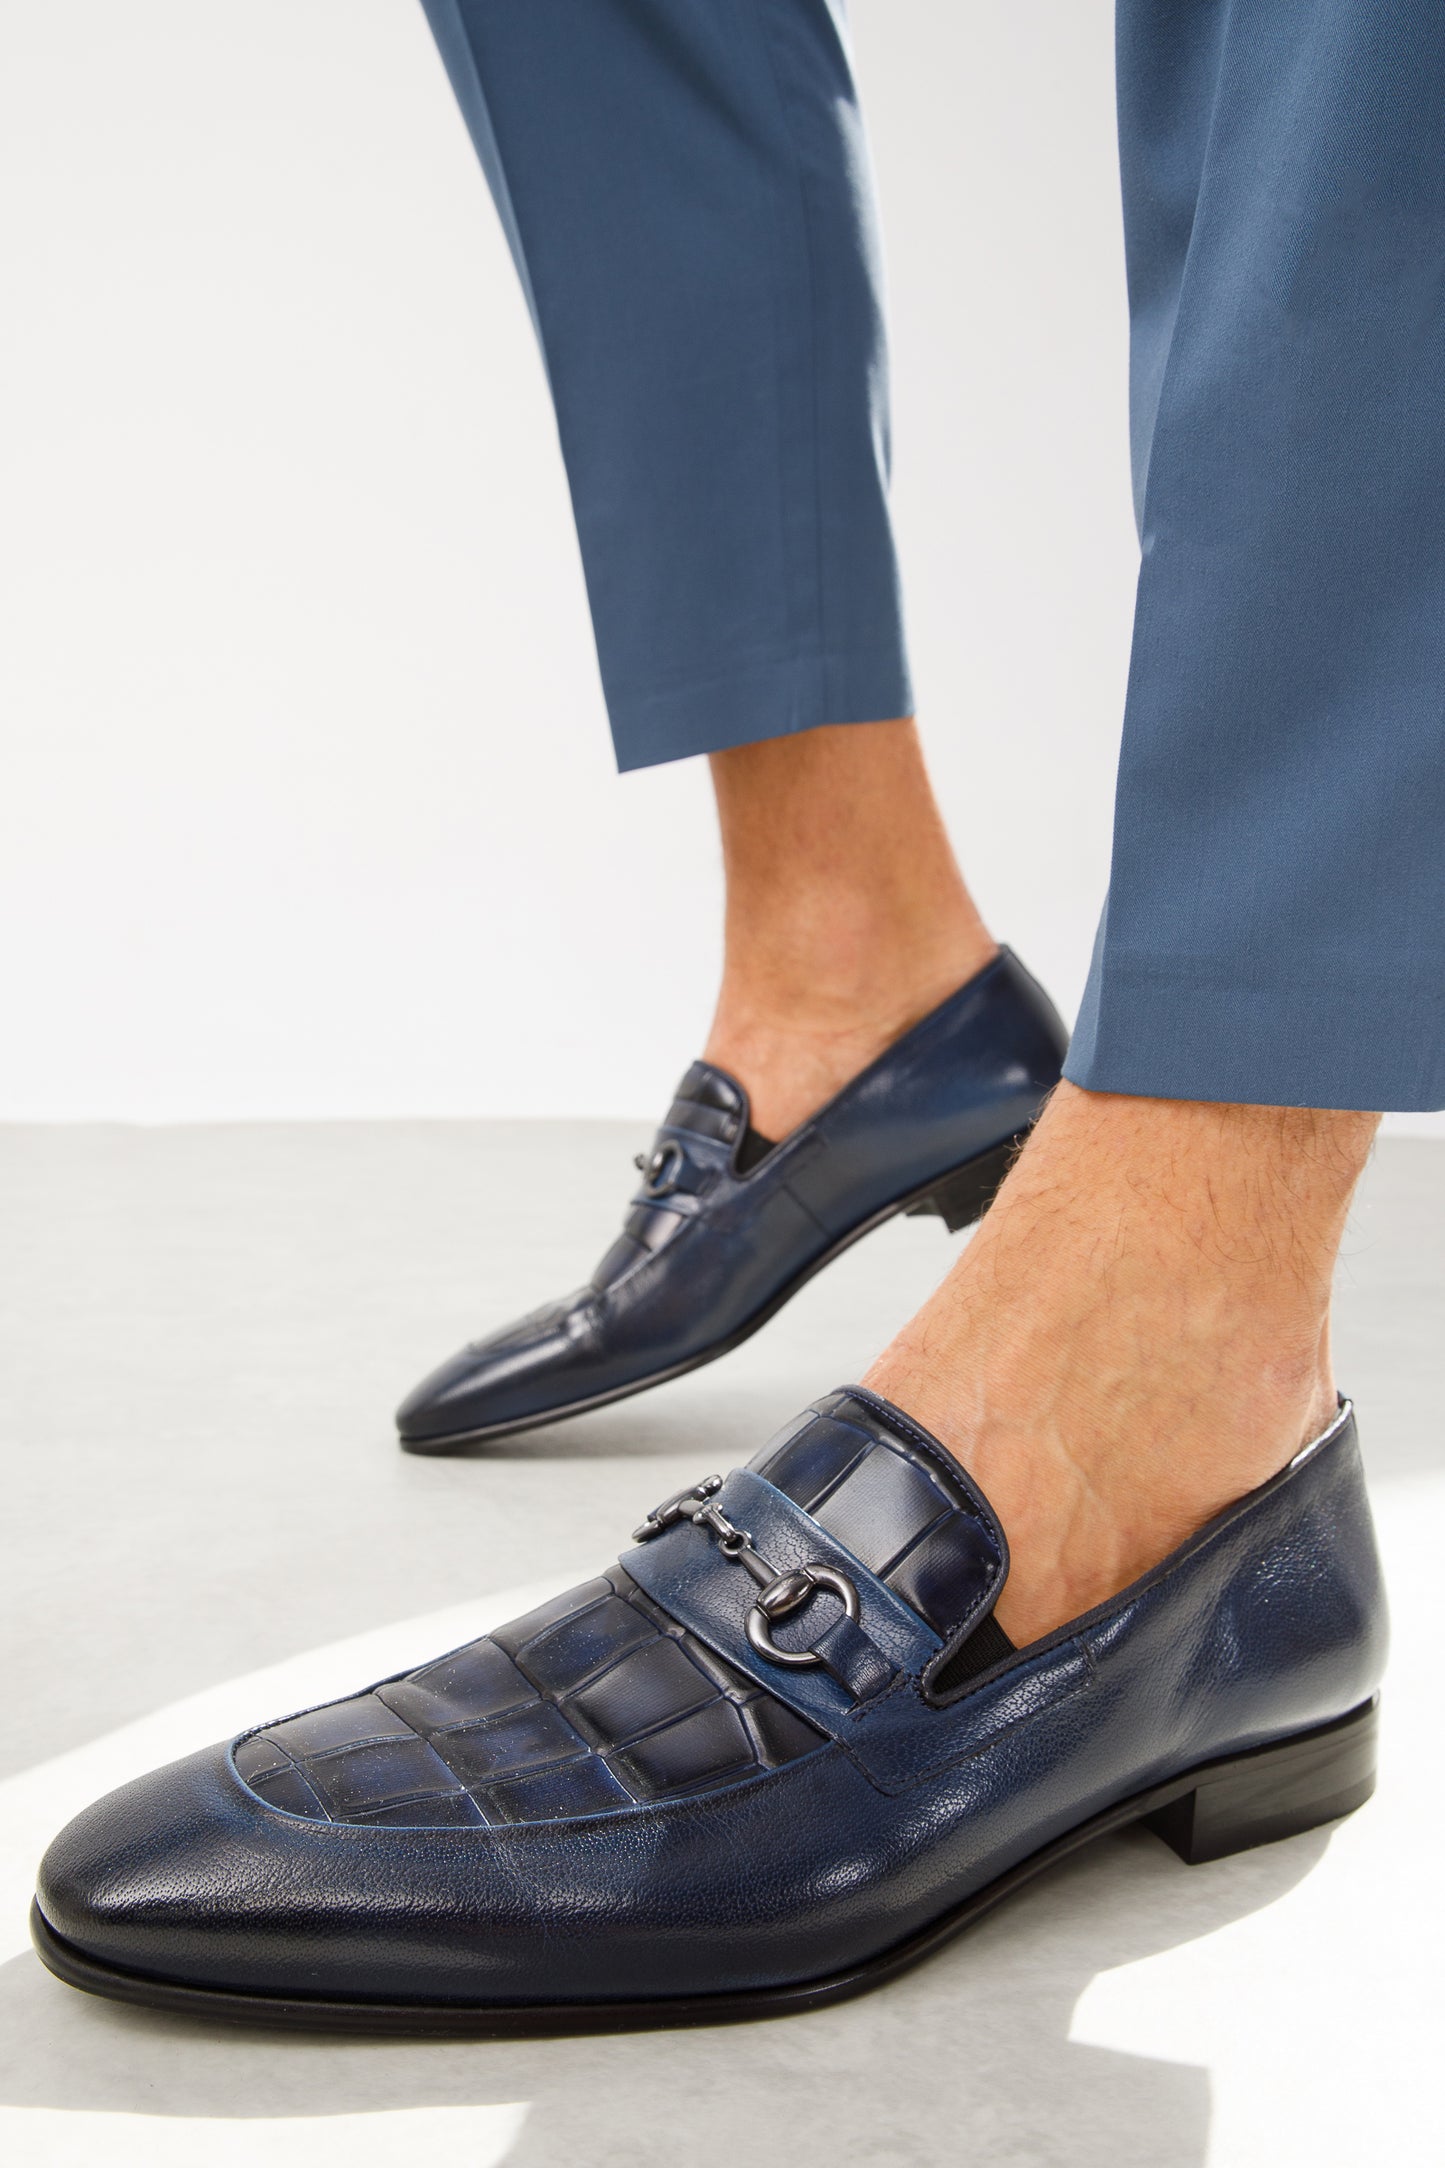 The Pusan Navy Blue Leather Bit Loafer Men Shoe